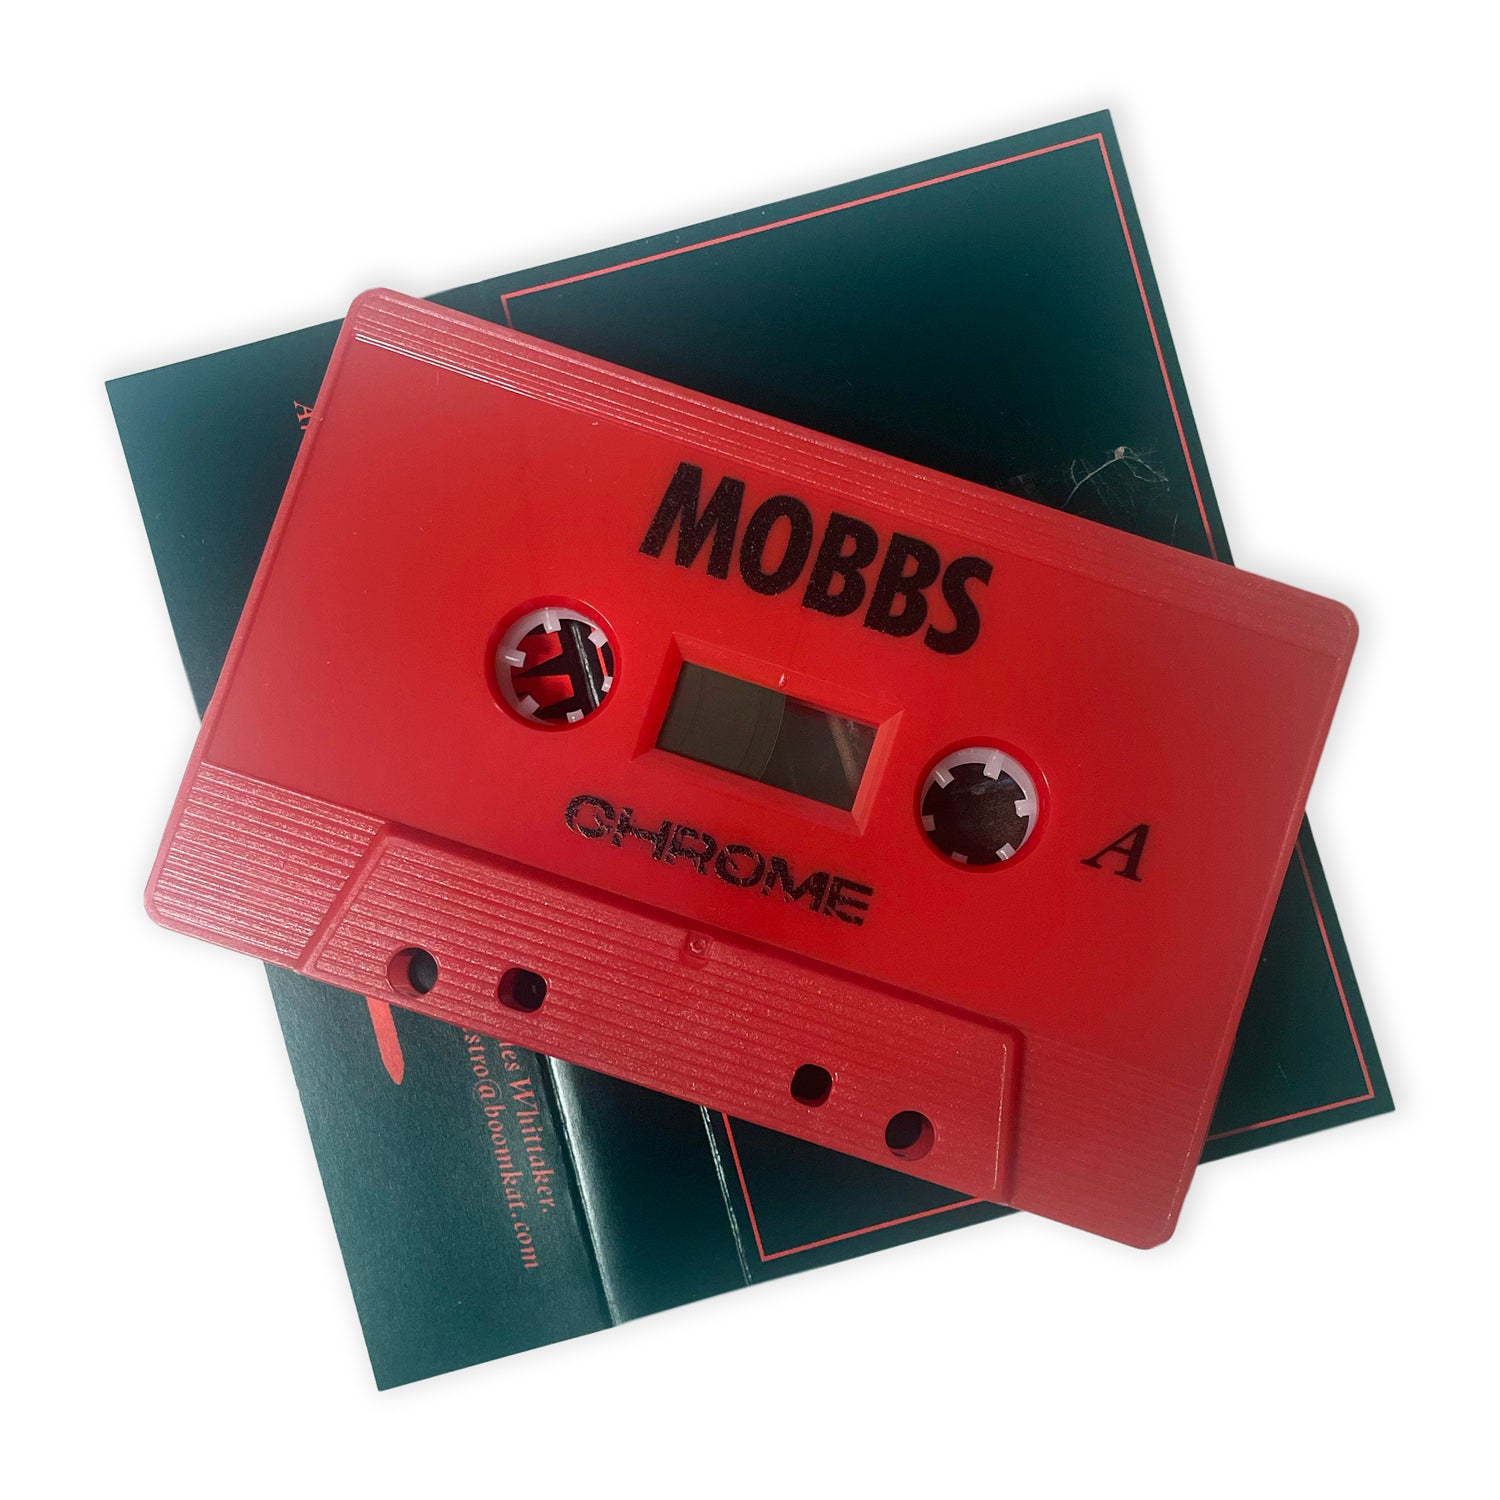 MOBBS - Untitled